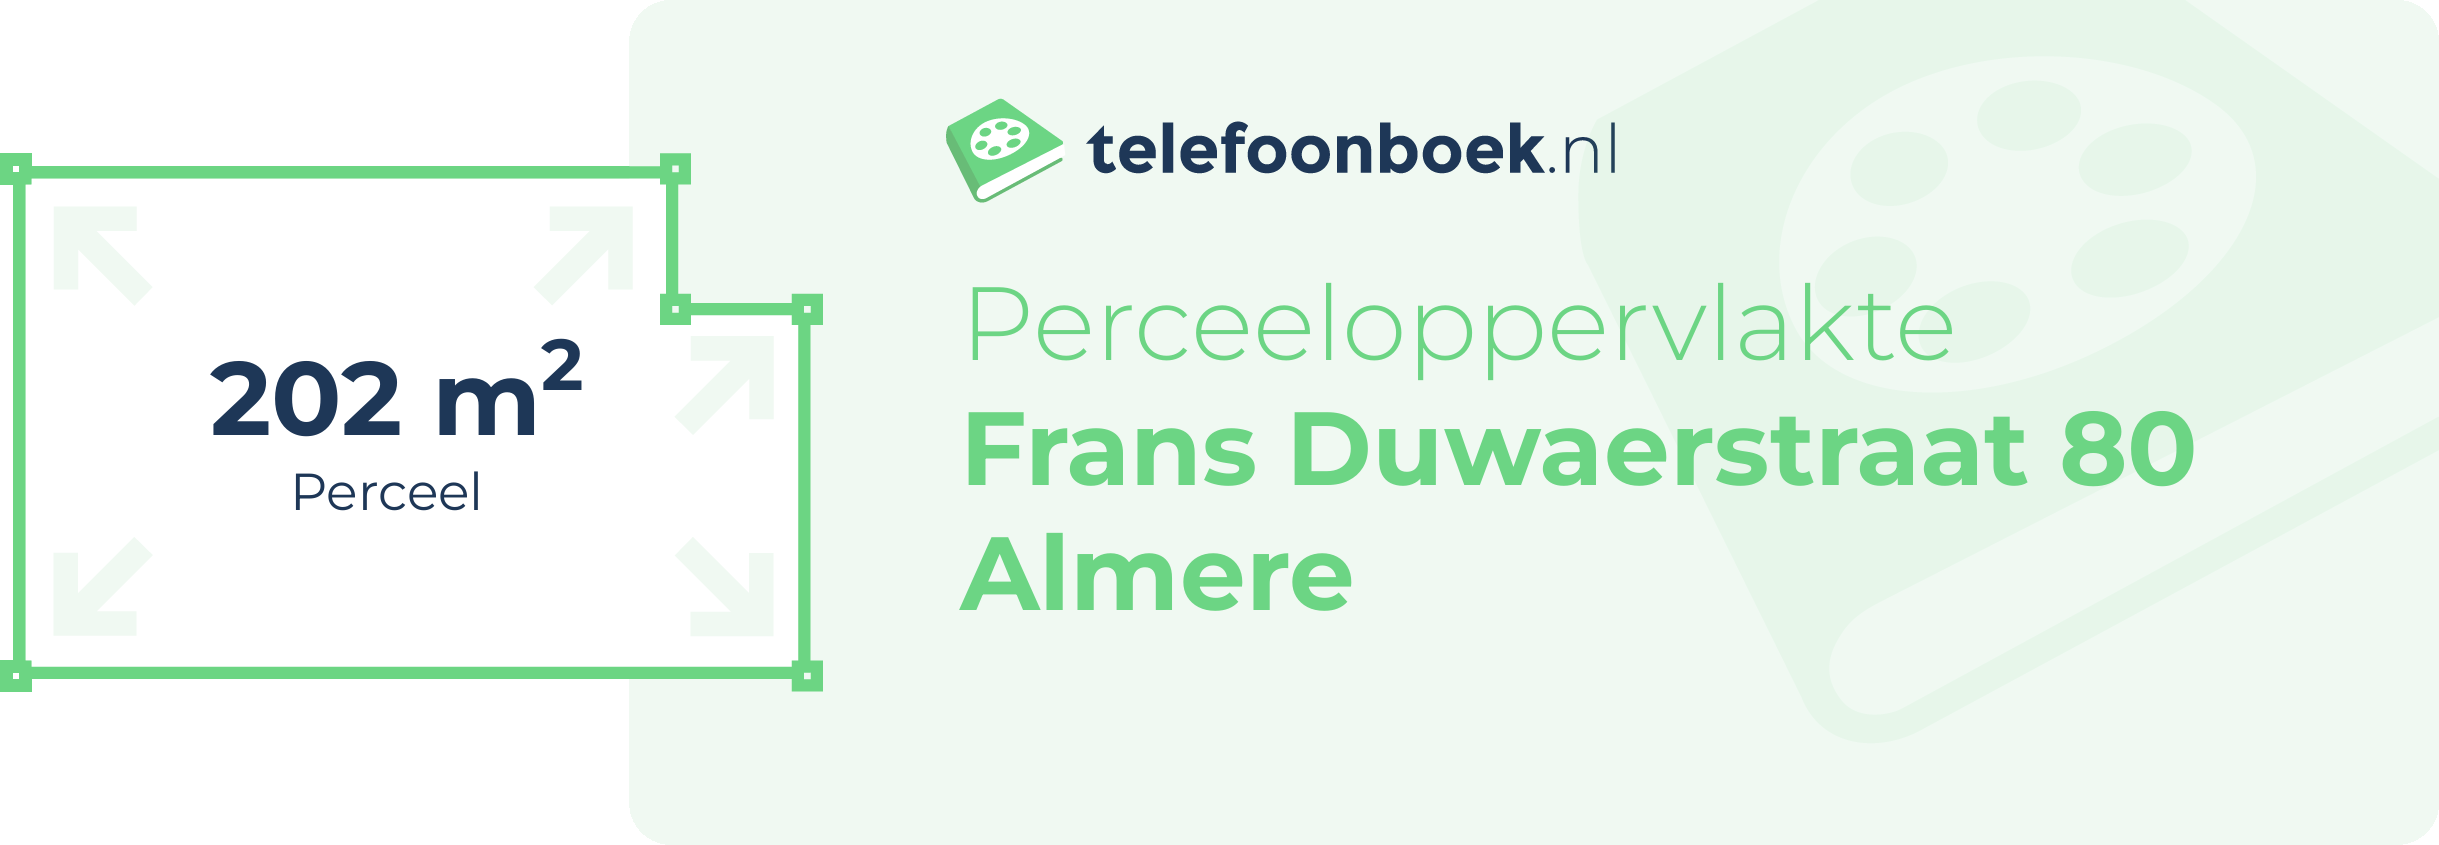 Perceeloppervlakte Frans Duwaerstraat 80 Almere